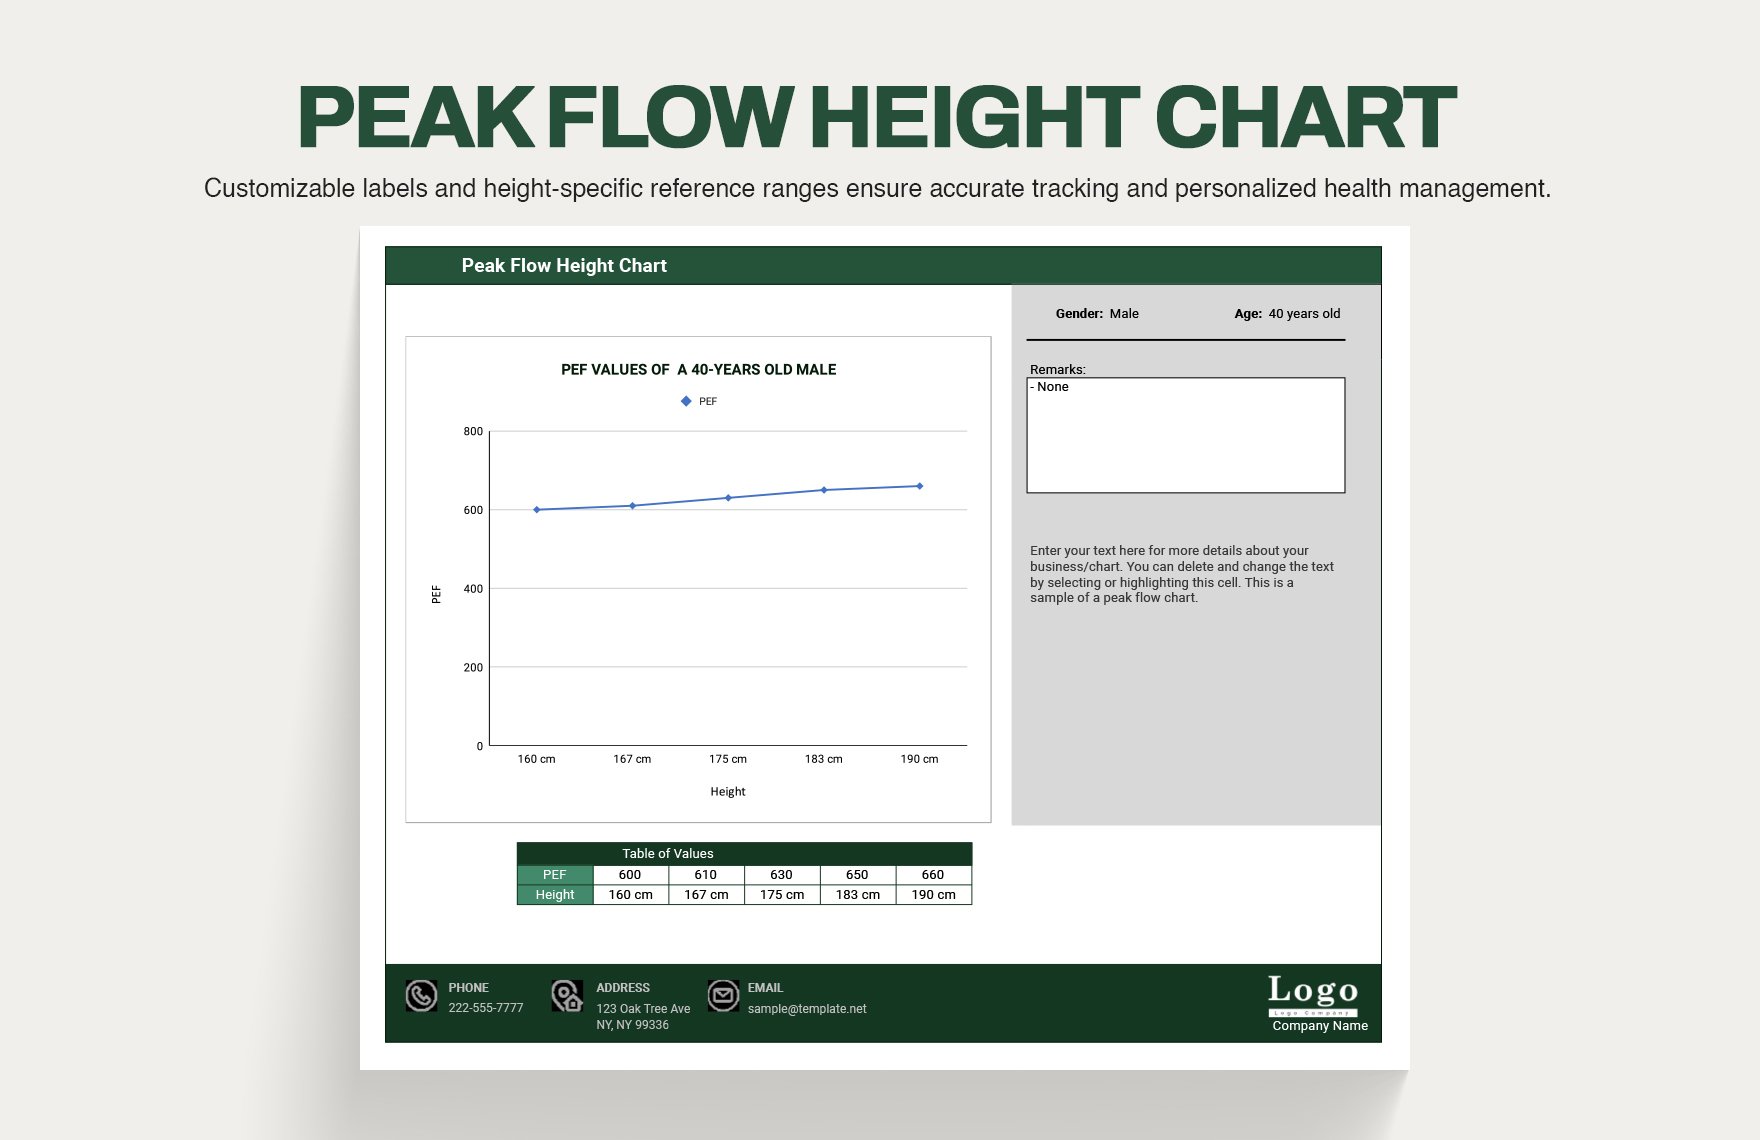 Peak Flow Height Chart